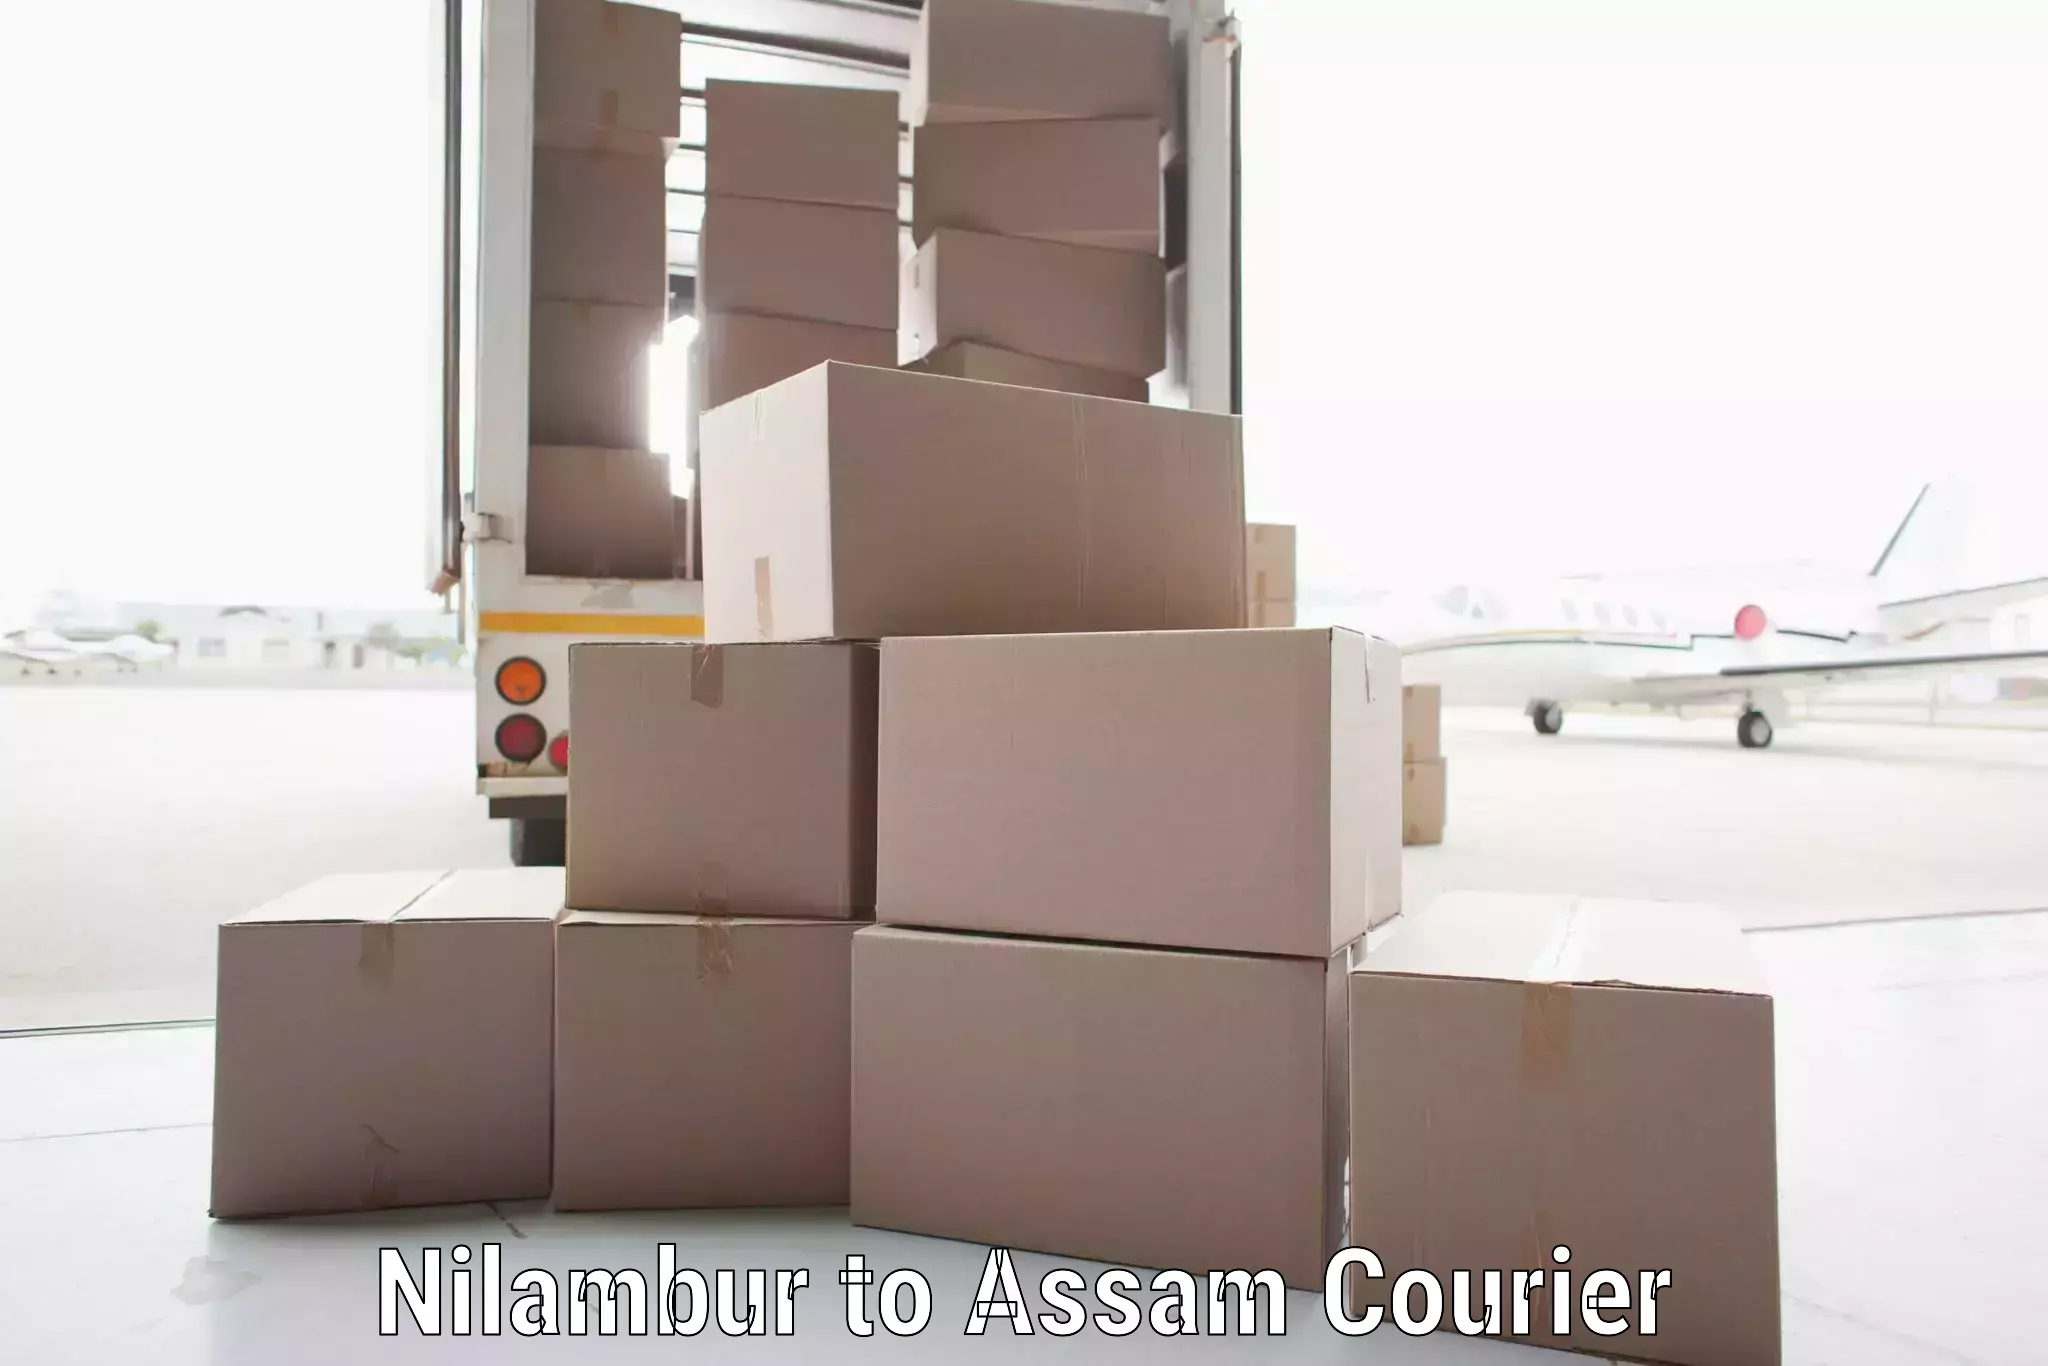 Global logistics network Nilambur to Tinsukia